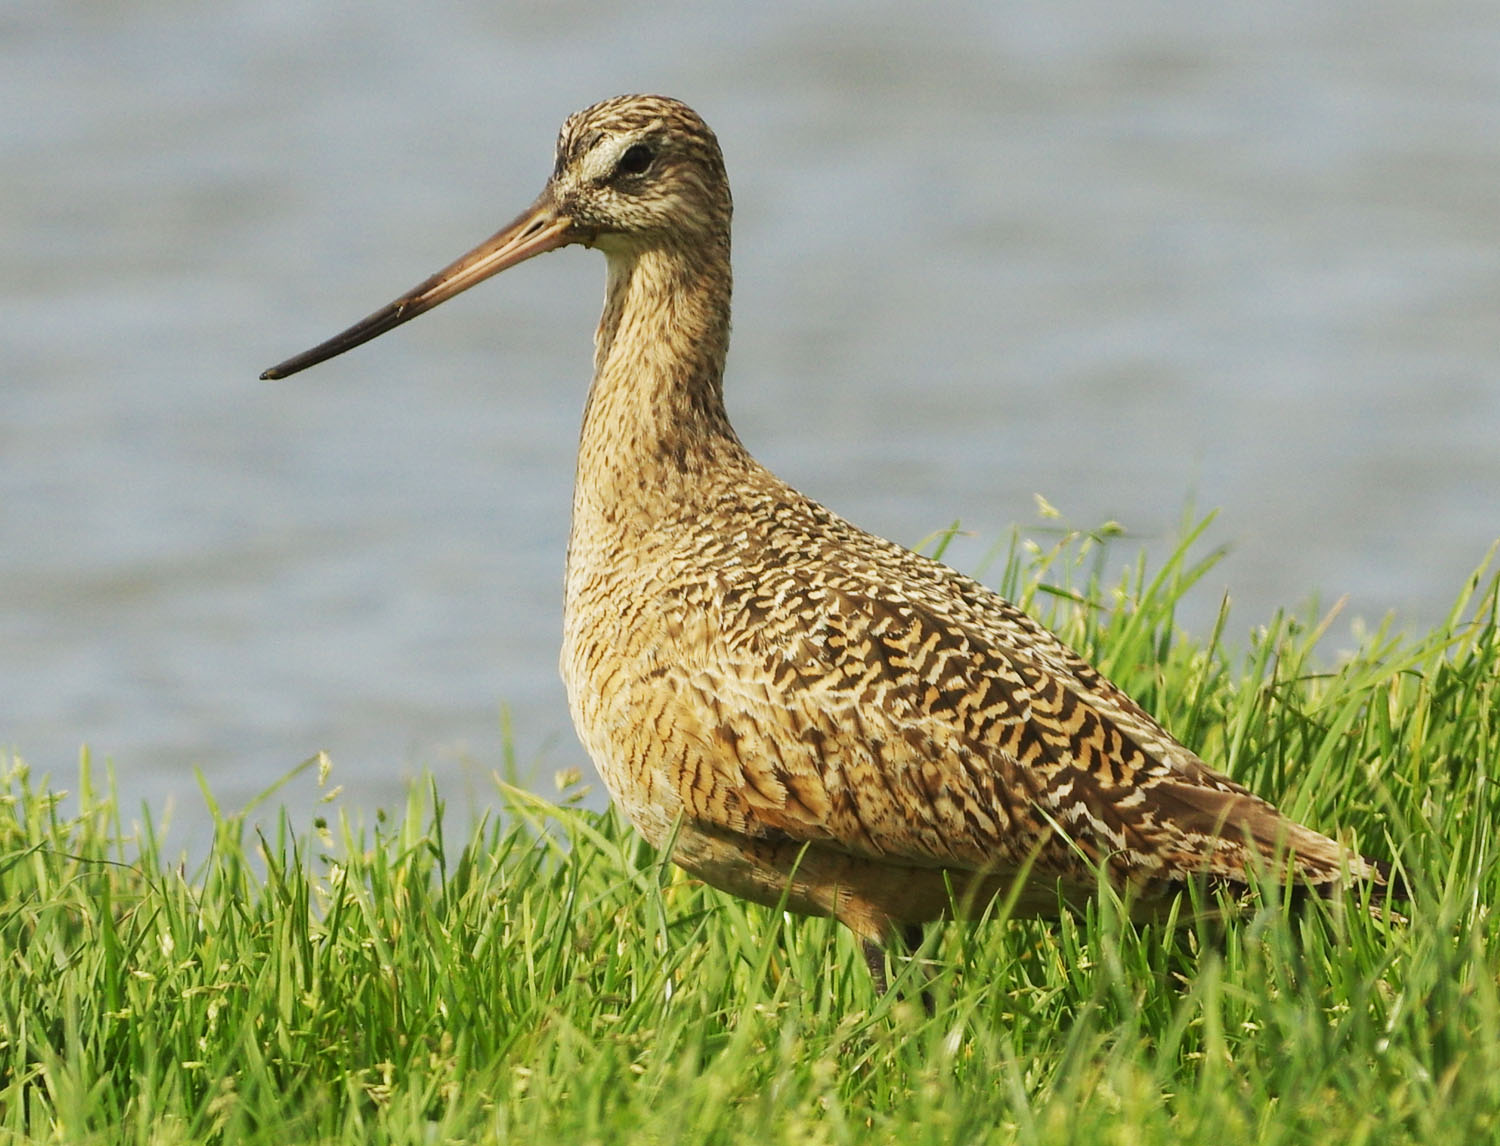 Bird with long beak, standing in the grass